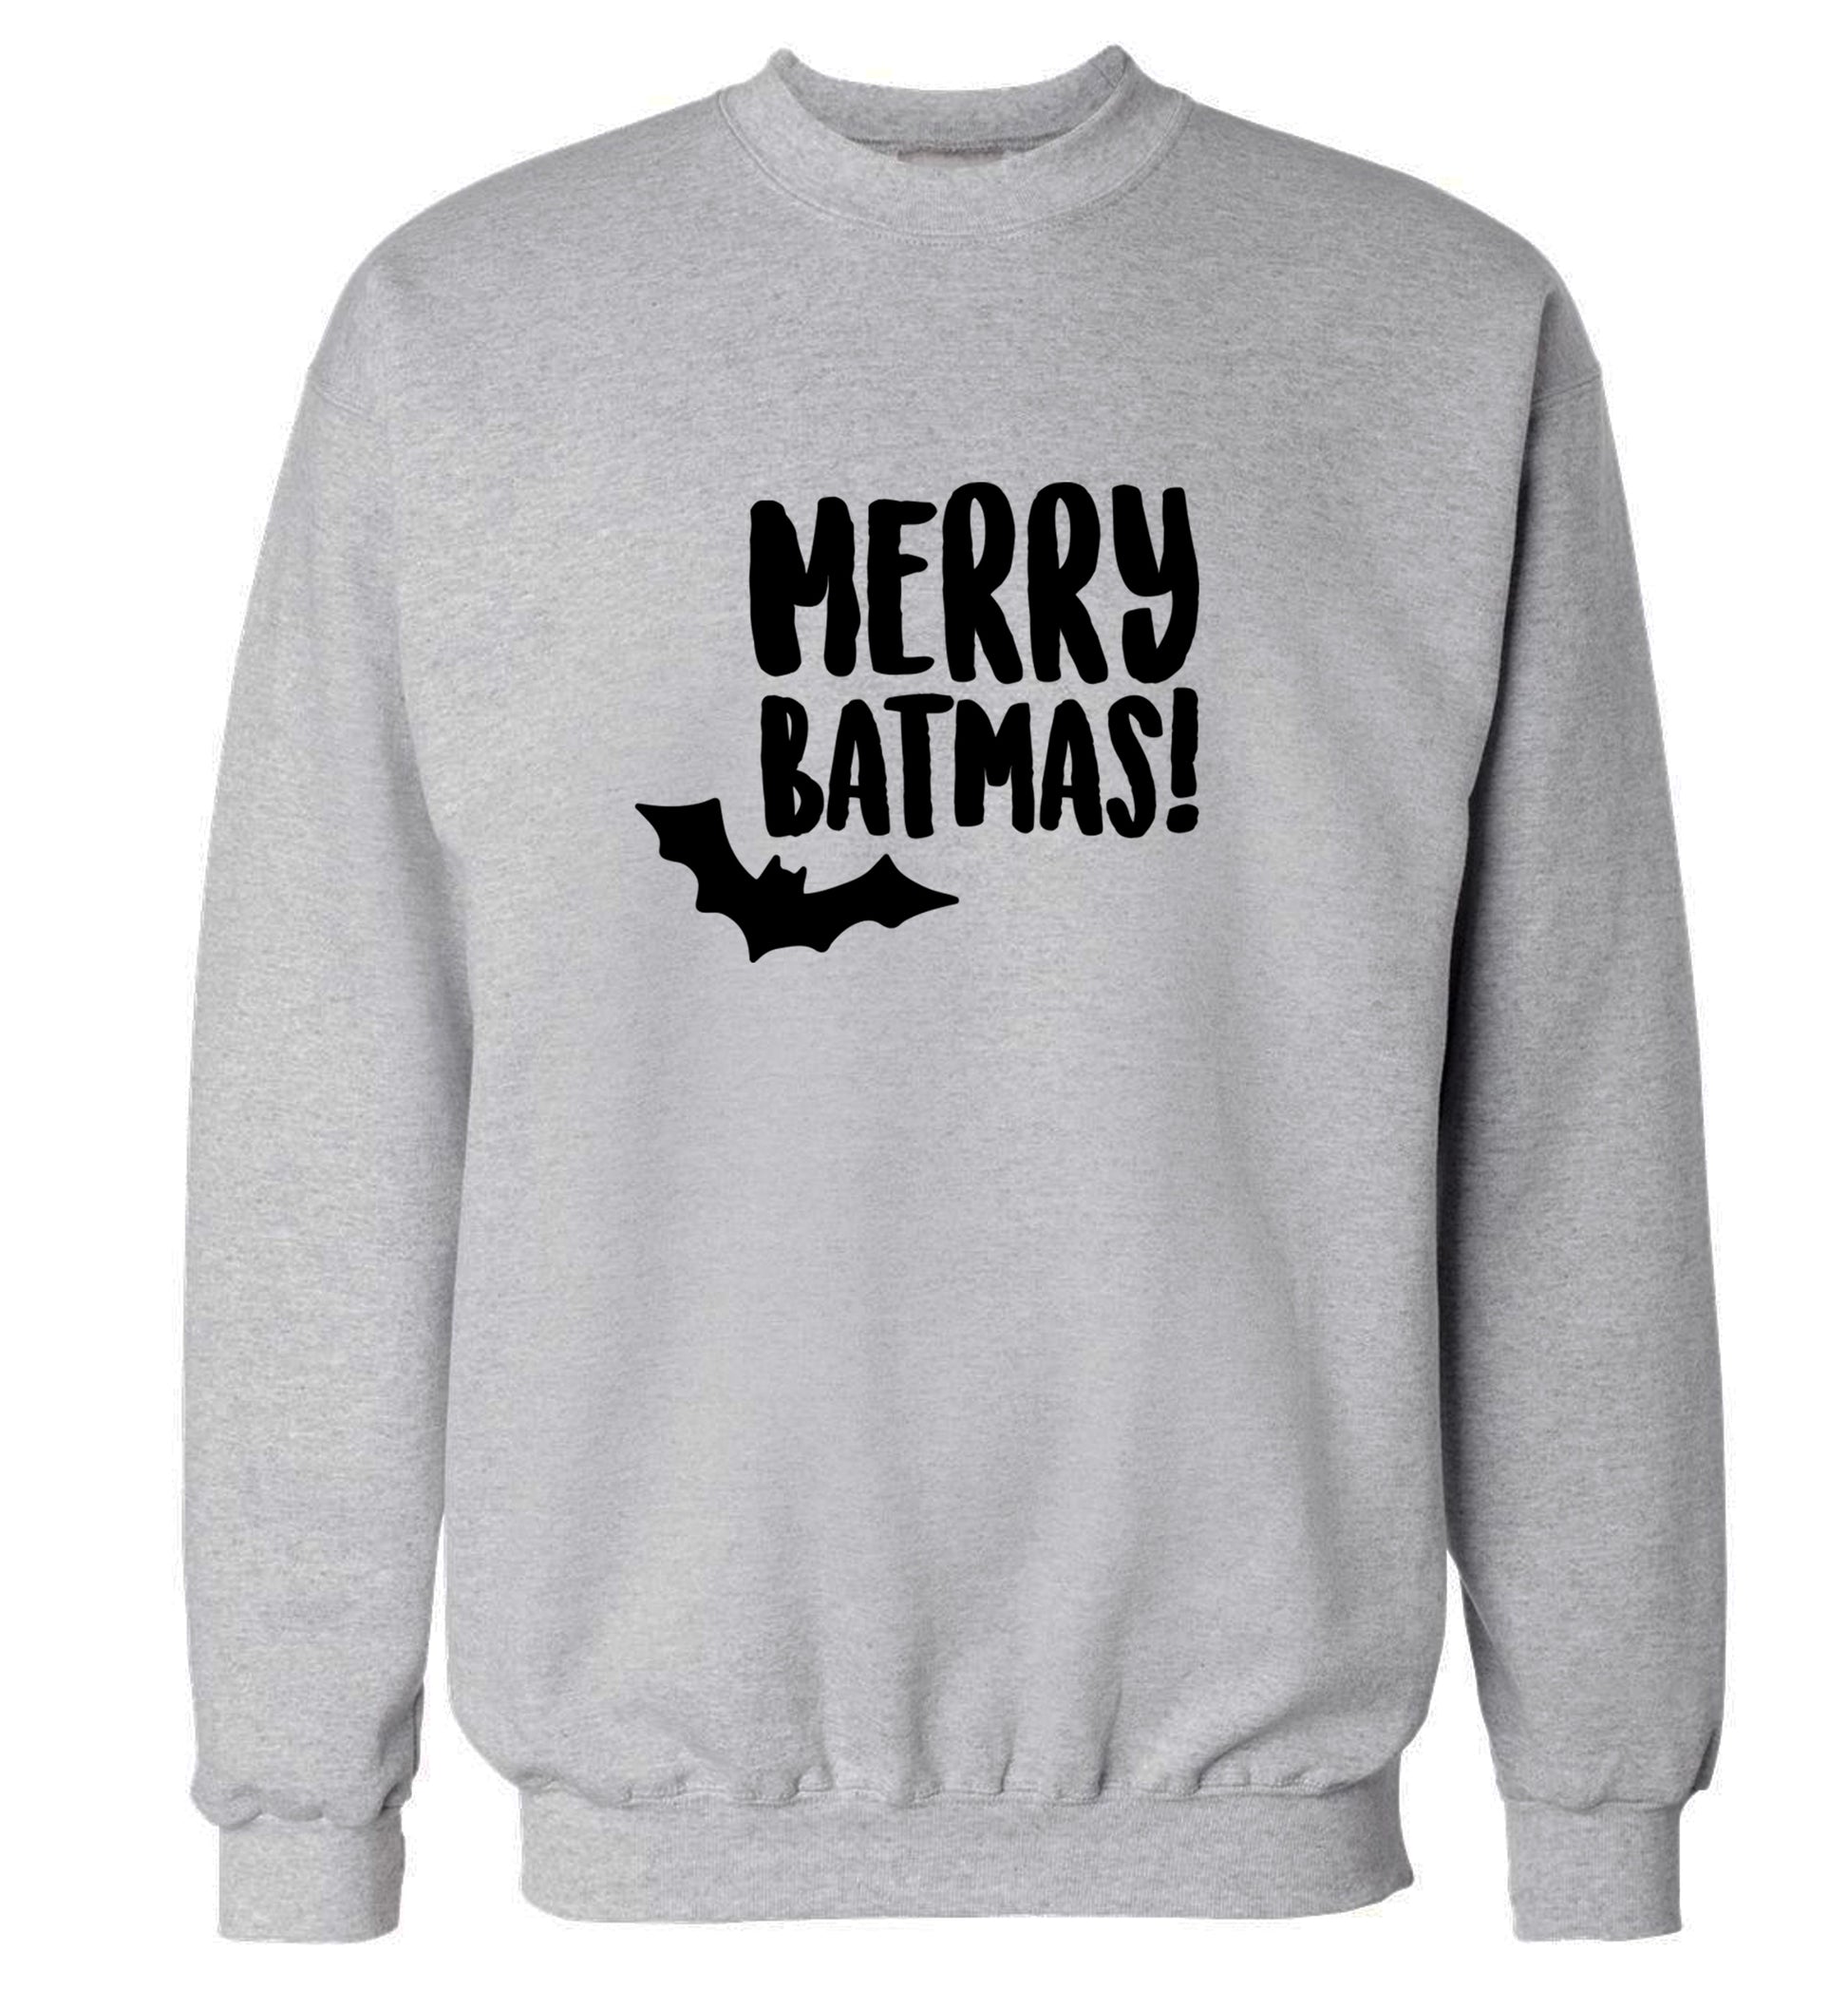 Merry Batmas Adult's unisex grey Sweater 2XL